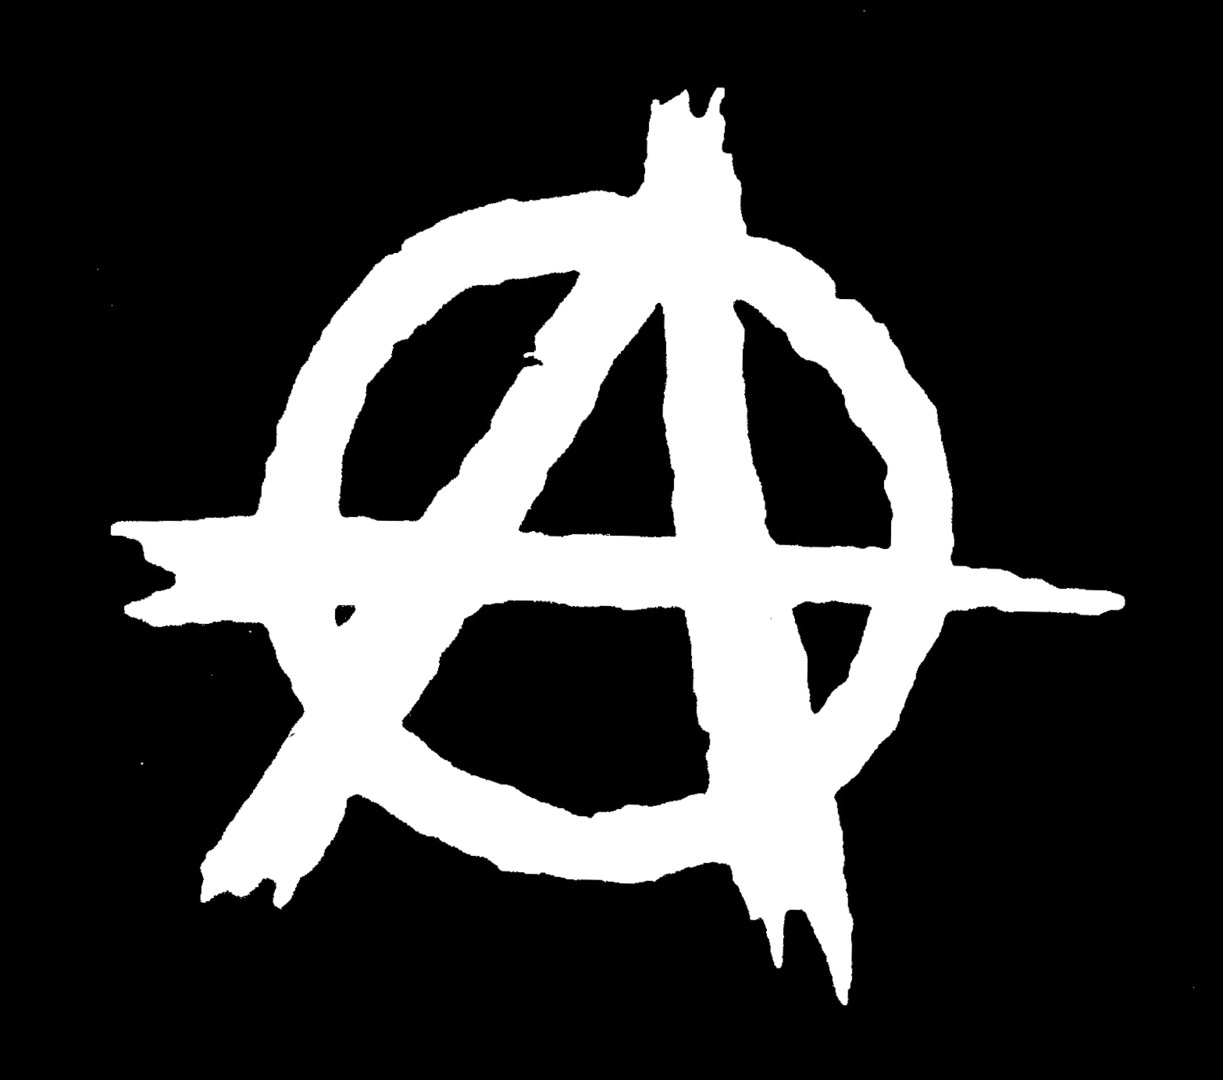 Anarchie_logo_patch.jpg